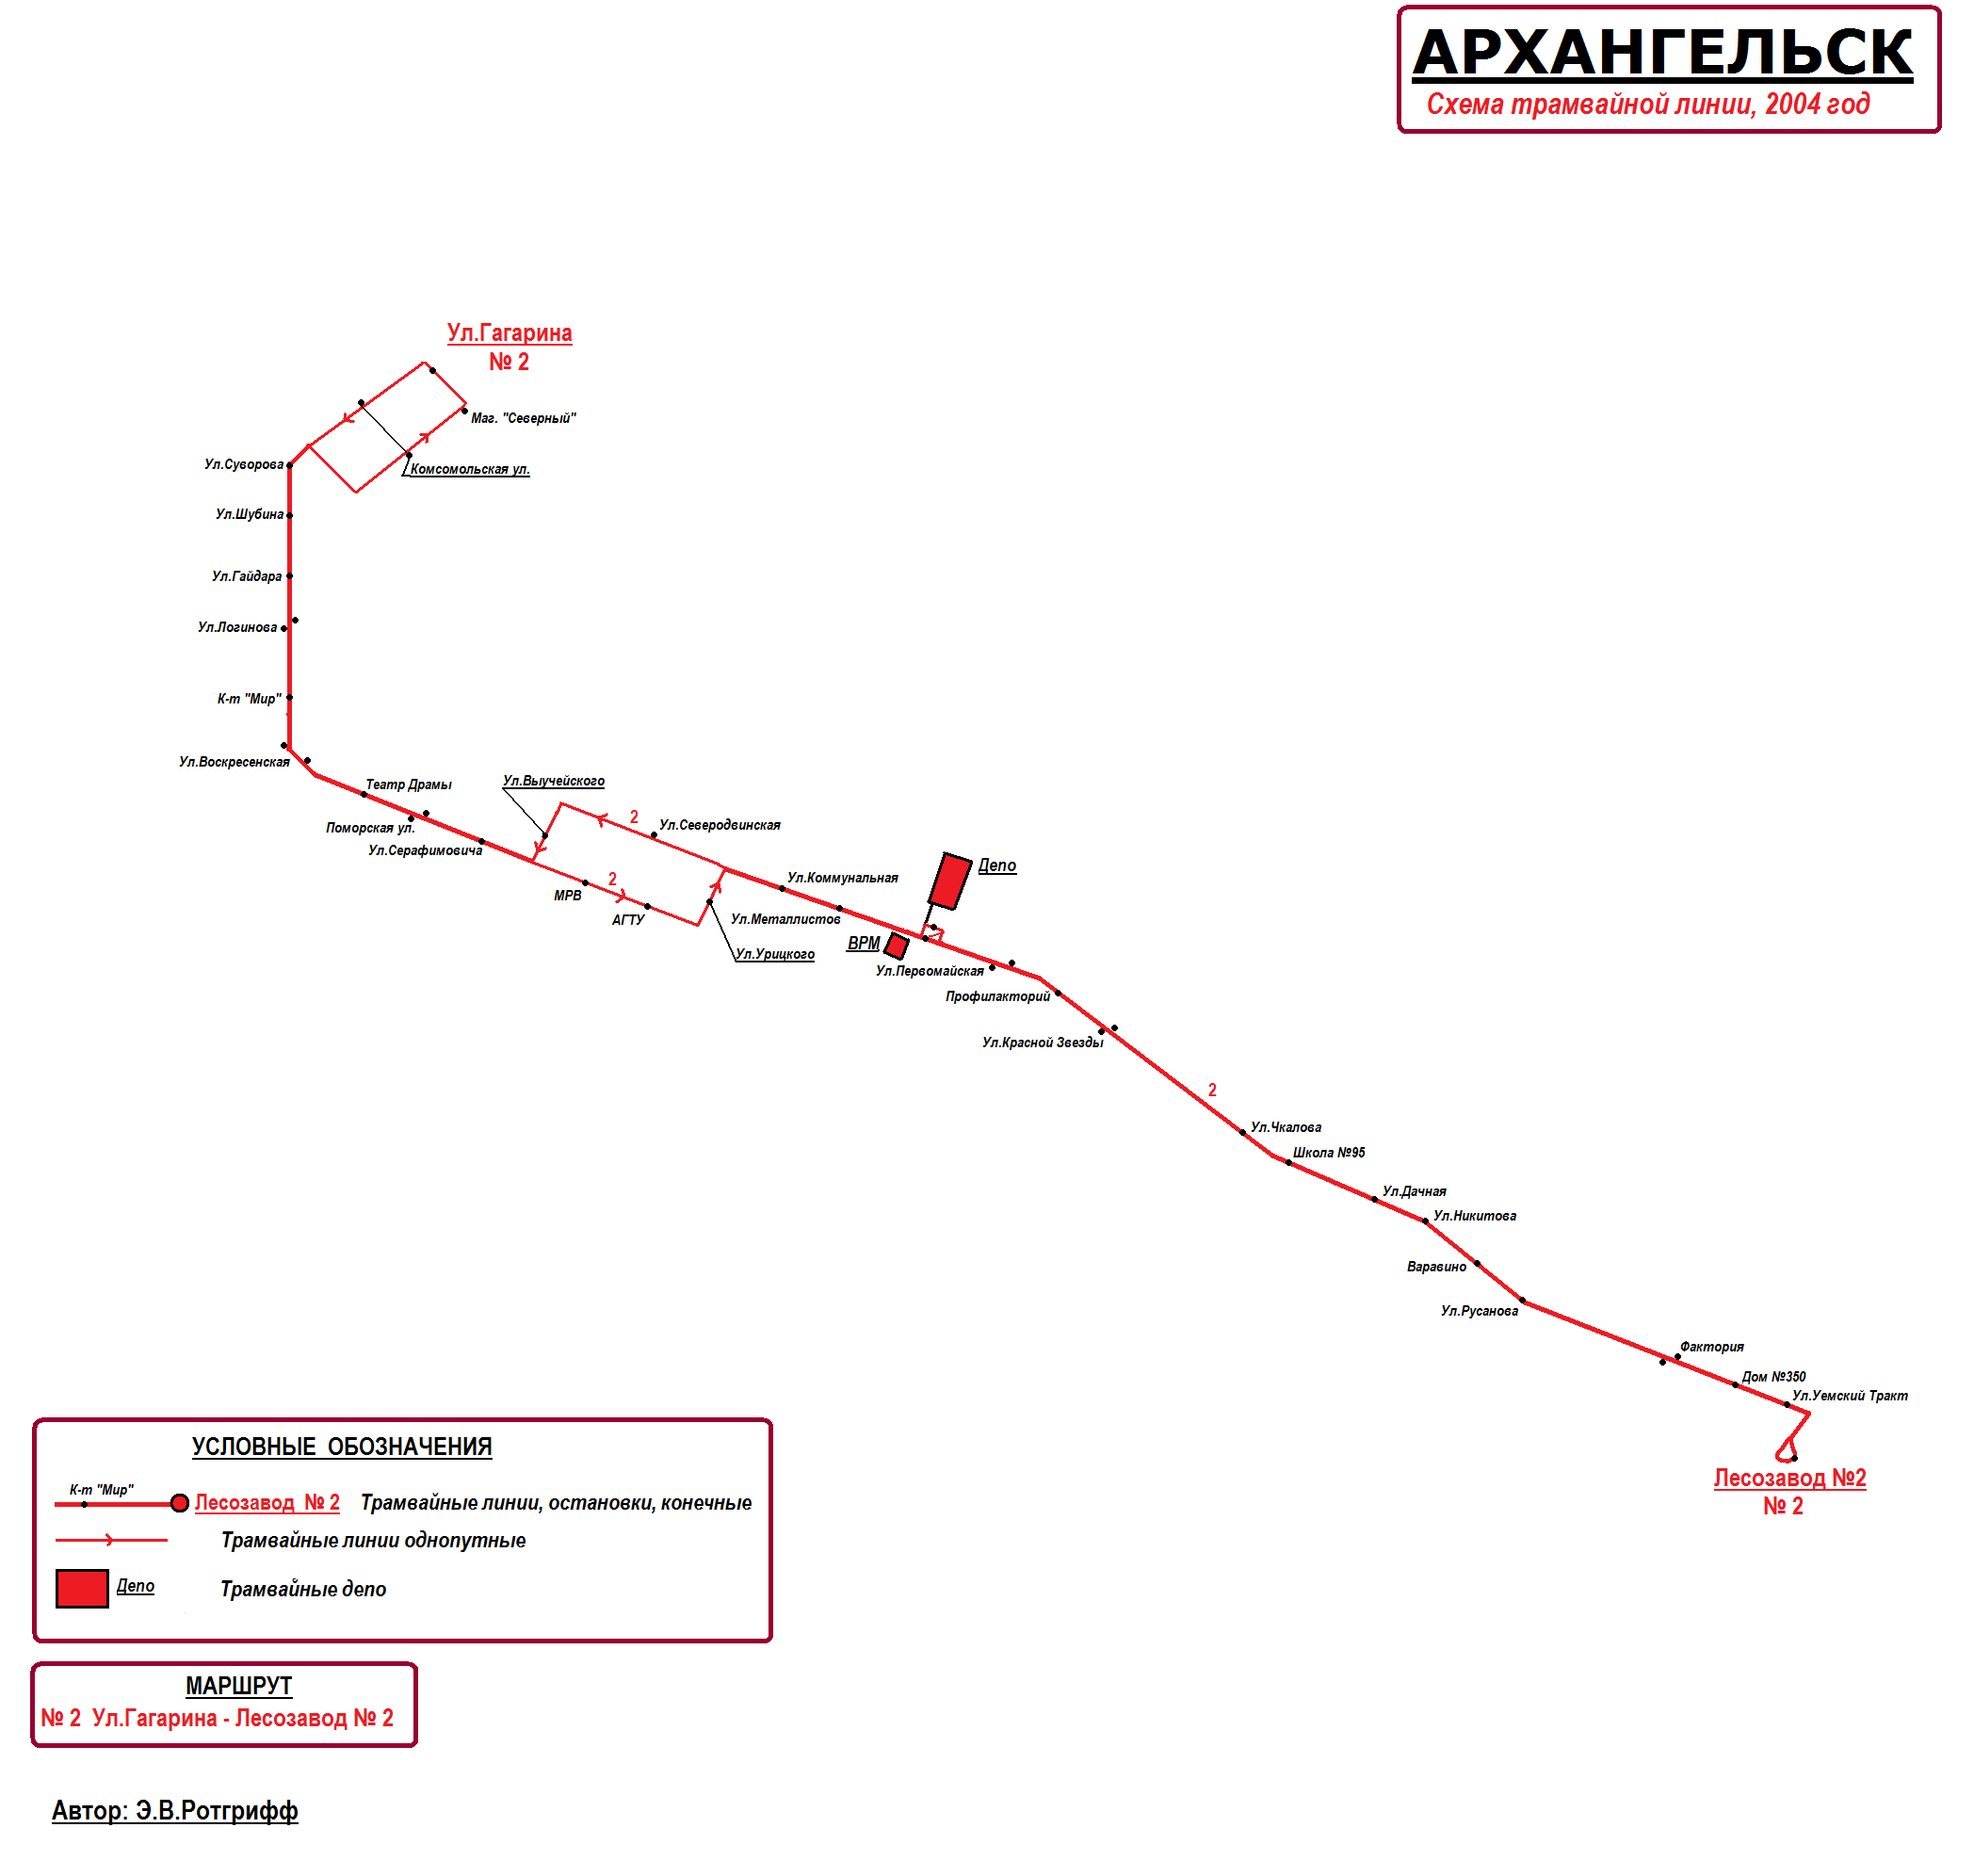 Arkhangelsk — Maps